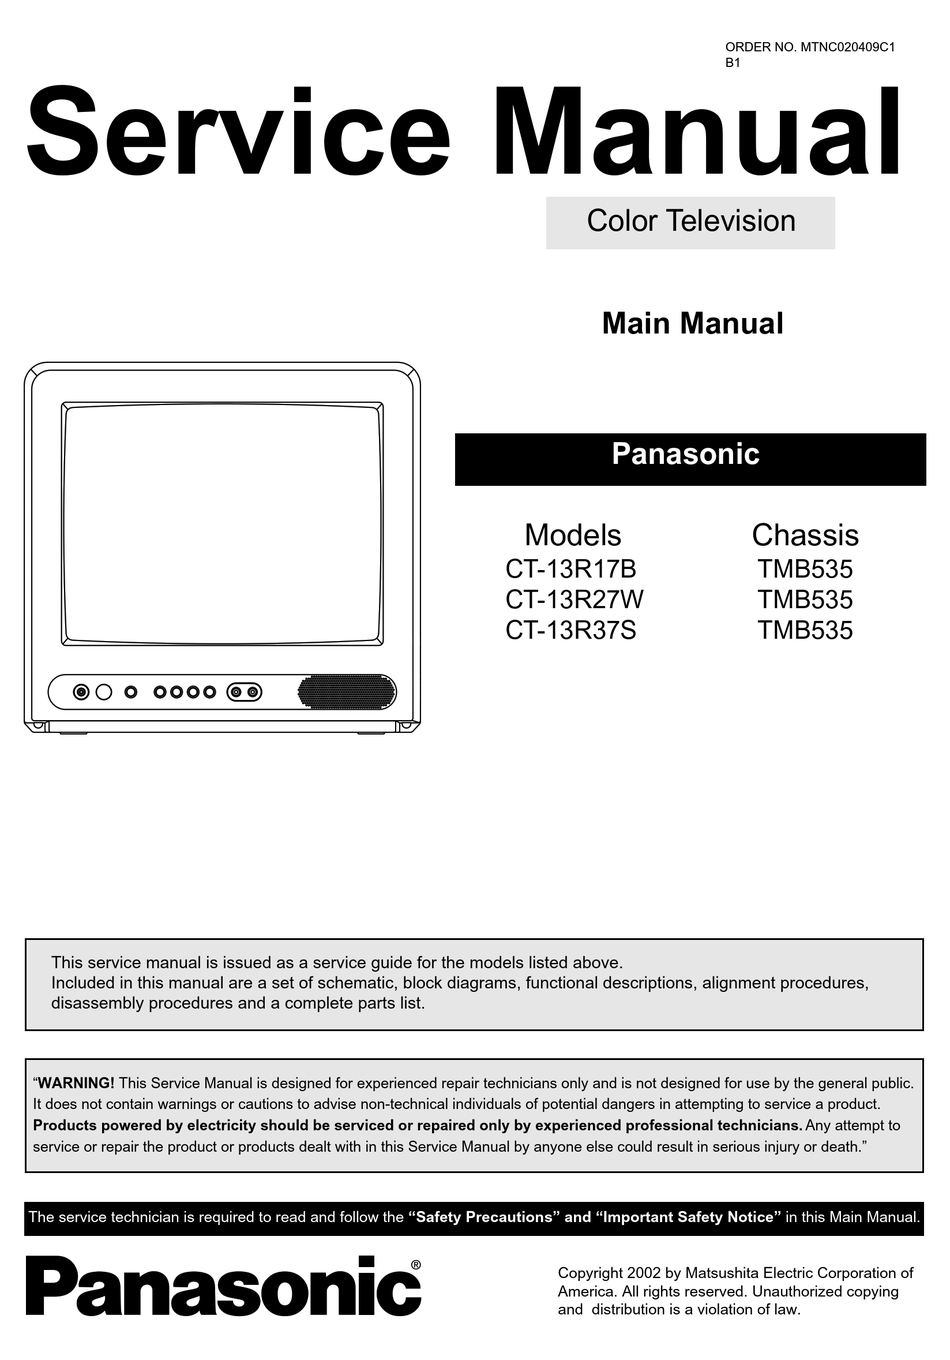 PANASONIC CT-13R17B SERVICE MANUAL Pdf Download | ManualsLib